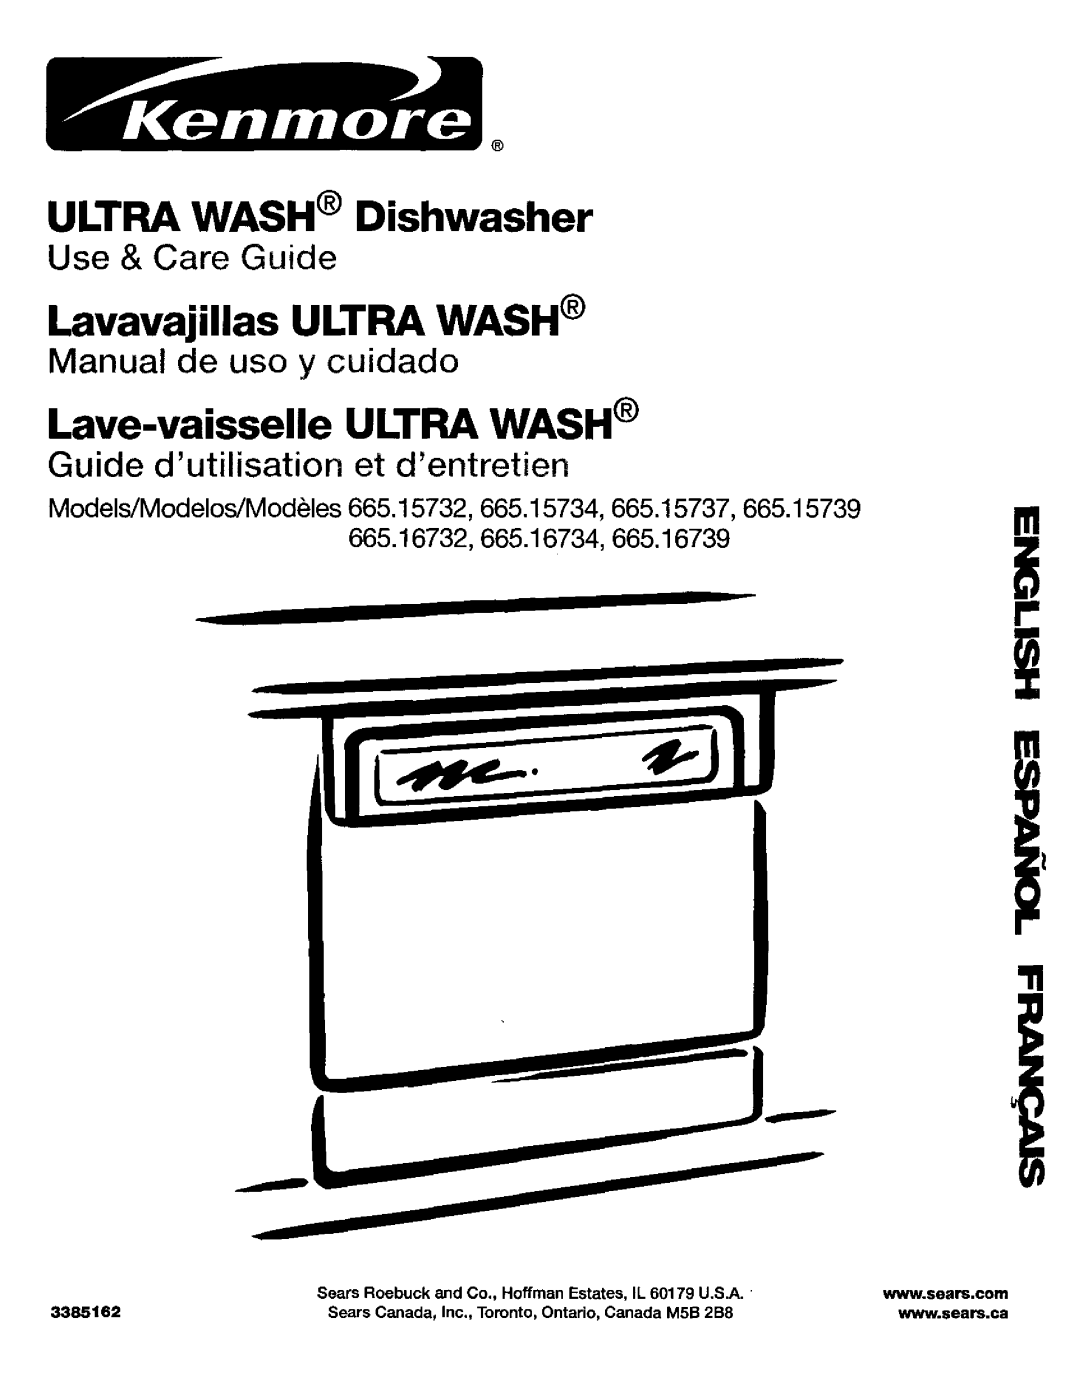 Kenmore 665.16739 manual ULTRA WASH Dishwasher, Lavavajillas ULTRA WASH, Lave-vaisselleULTRA WASH, Use & Care Guide 